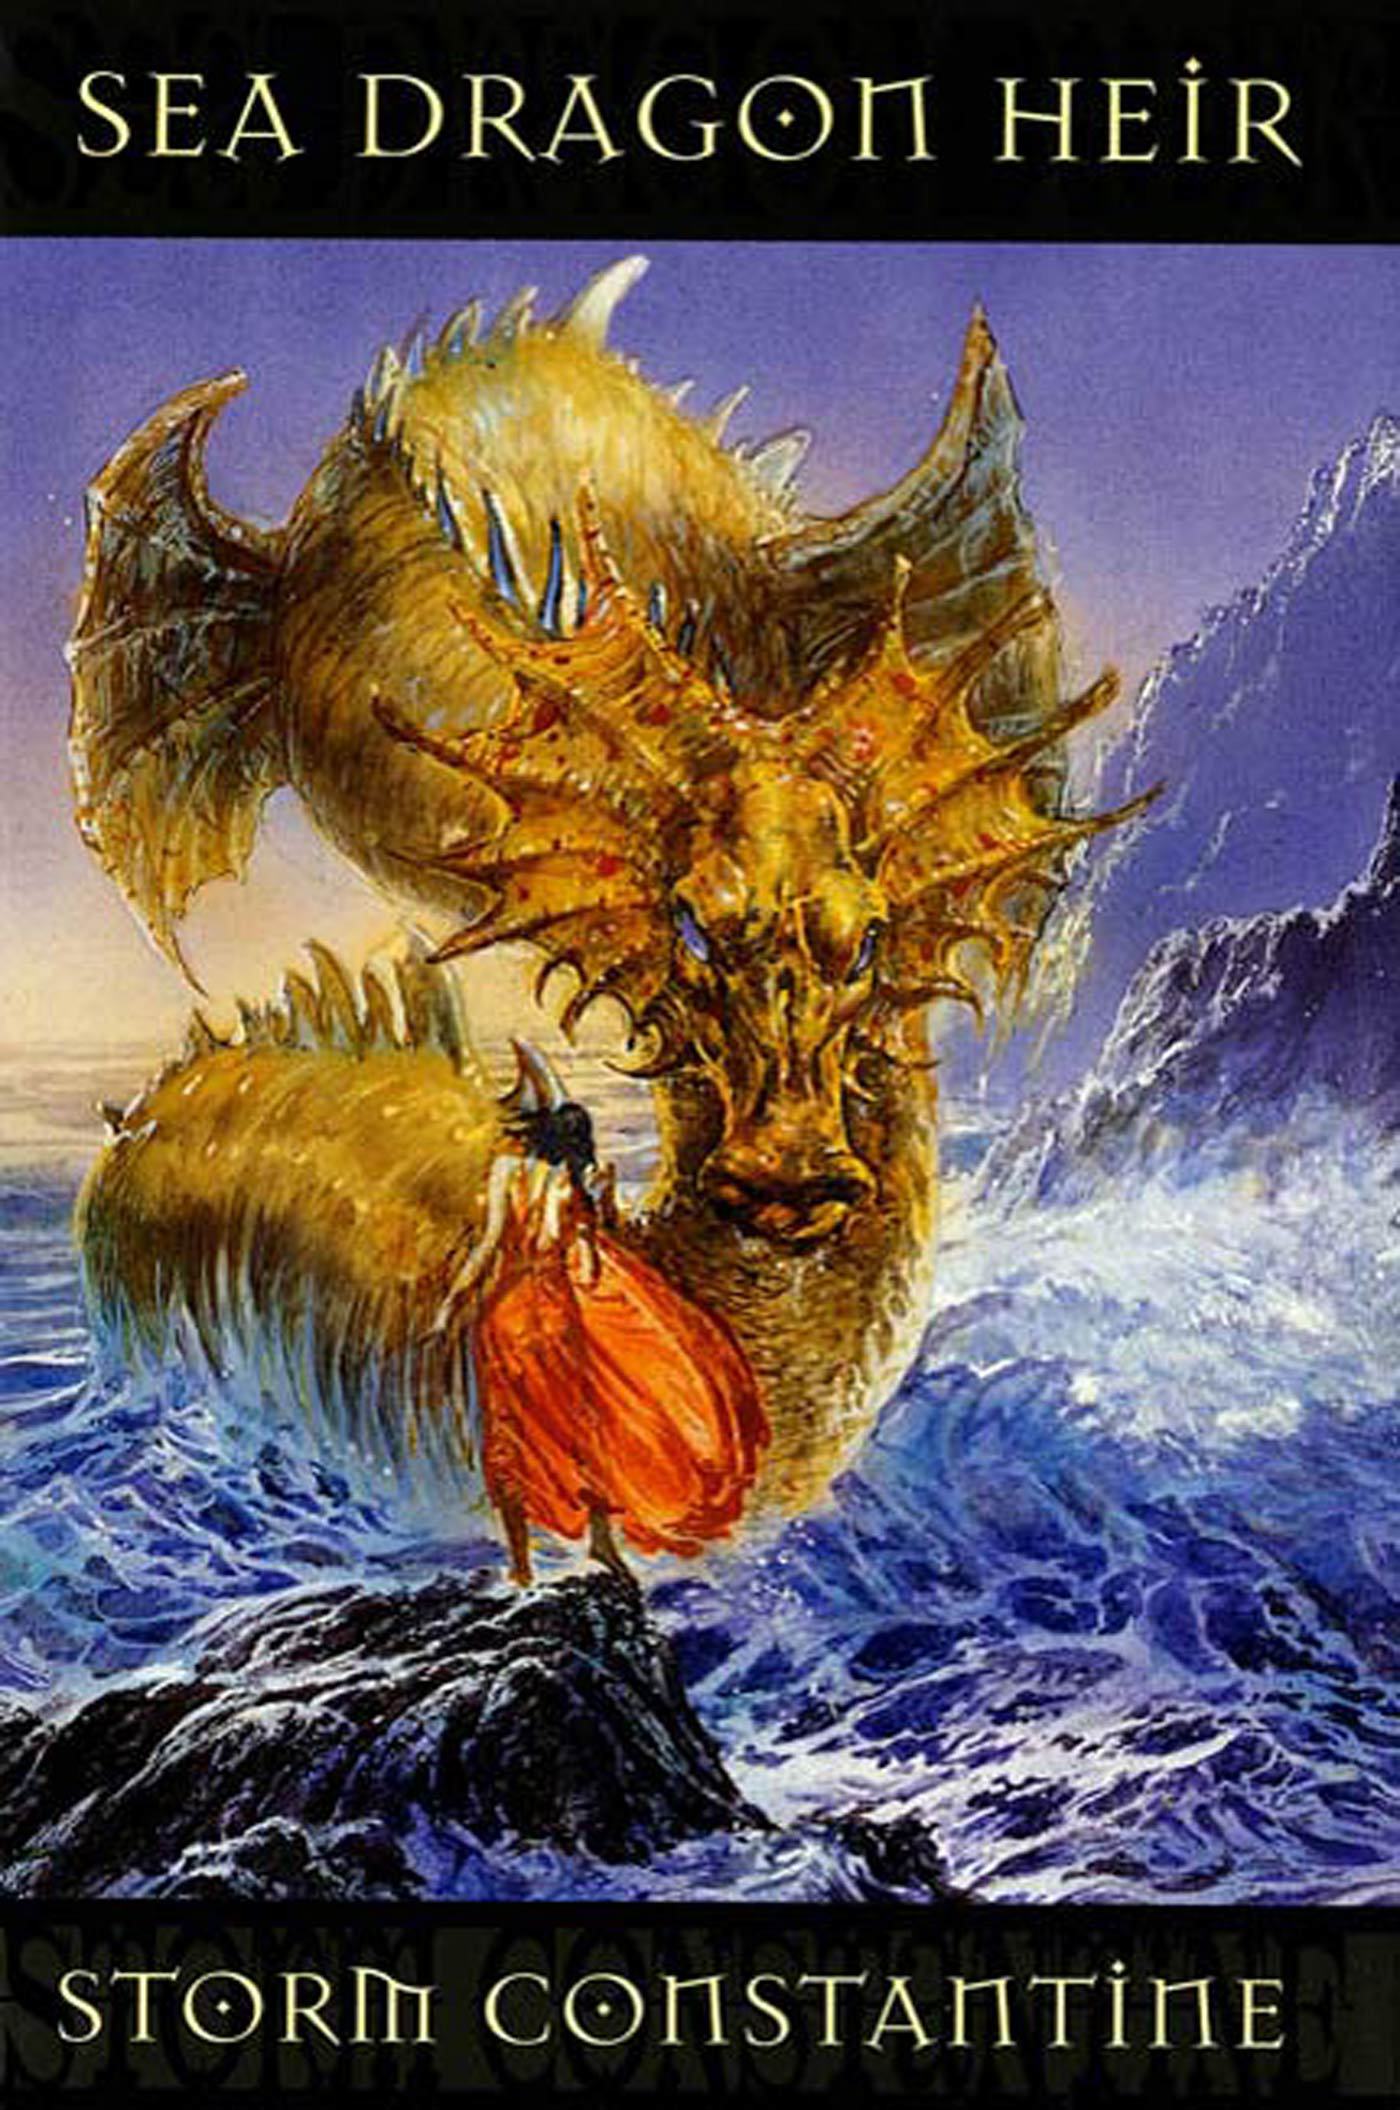 Dragon heir. Драконы моря книга. Господин тигр, Бетси и морской дракон. Драконы моря читать онлайн. Книга про корабли драконы.